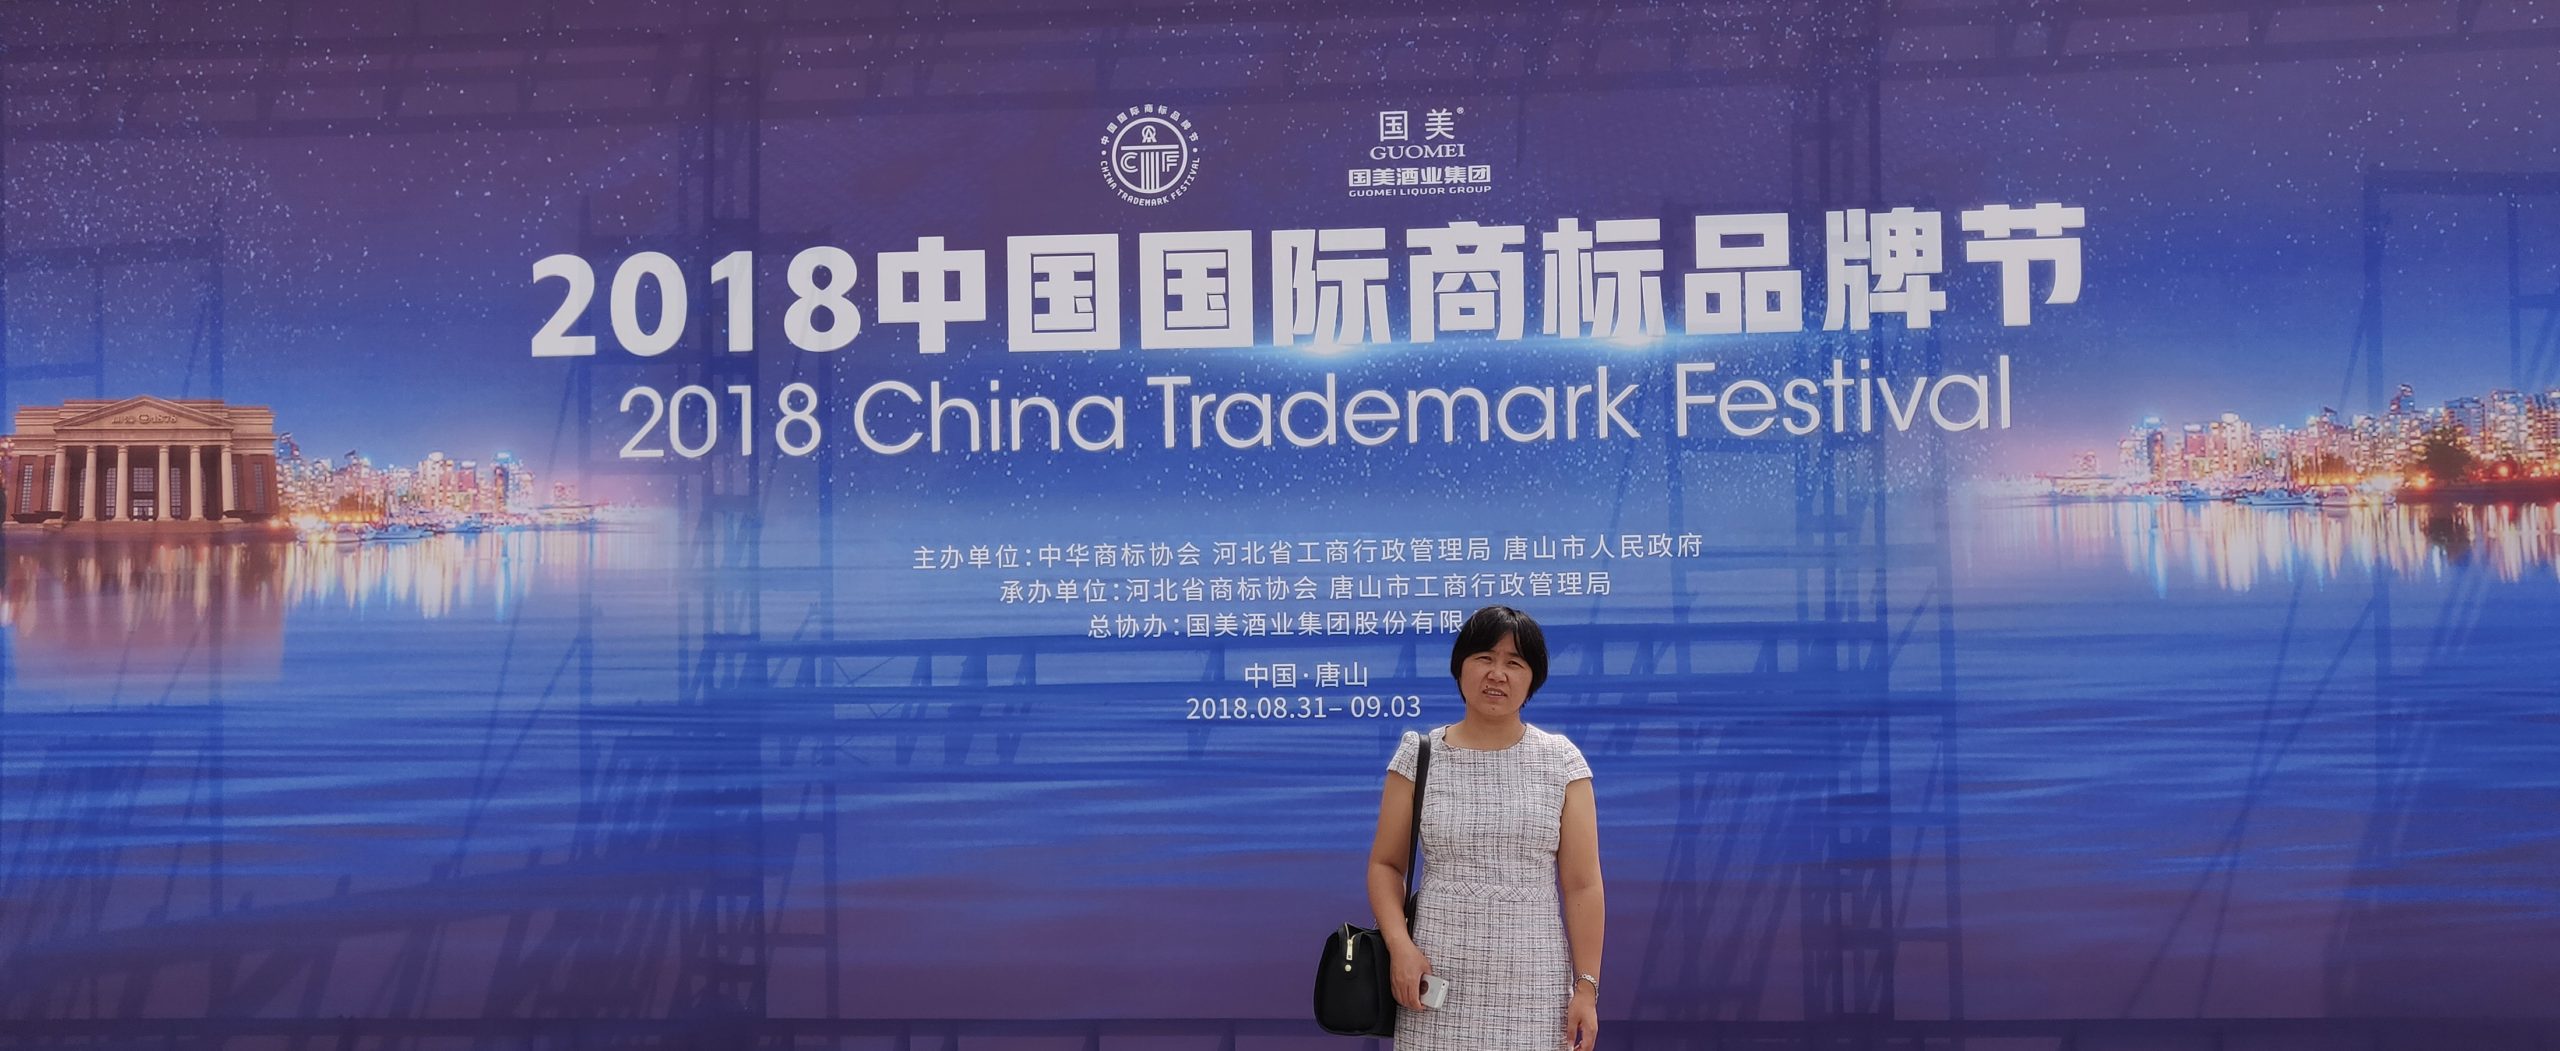 Notre associée, Mei Tao, au China Trademark Festival 2018 à Tangshan